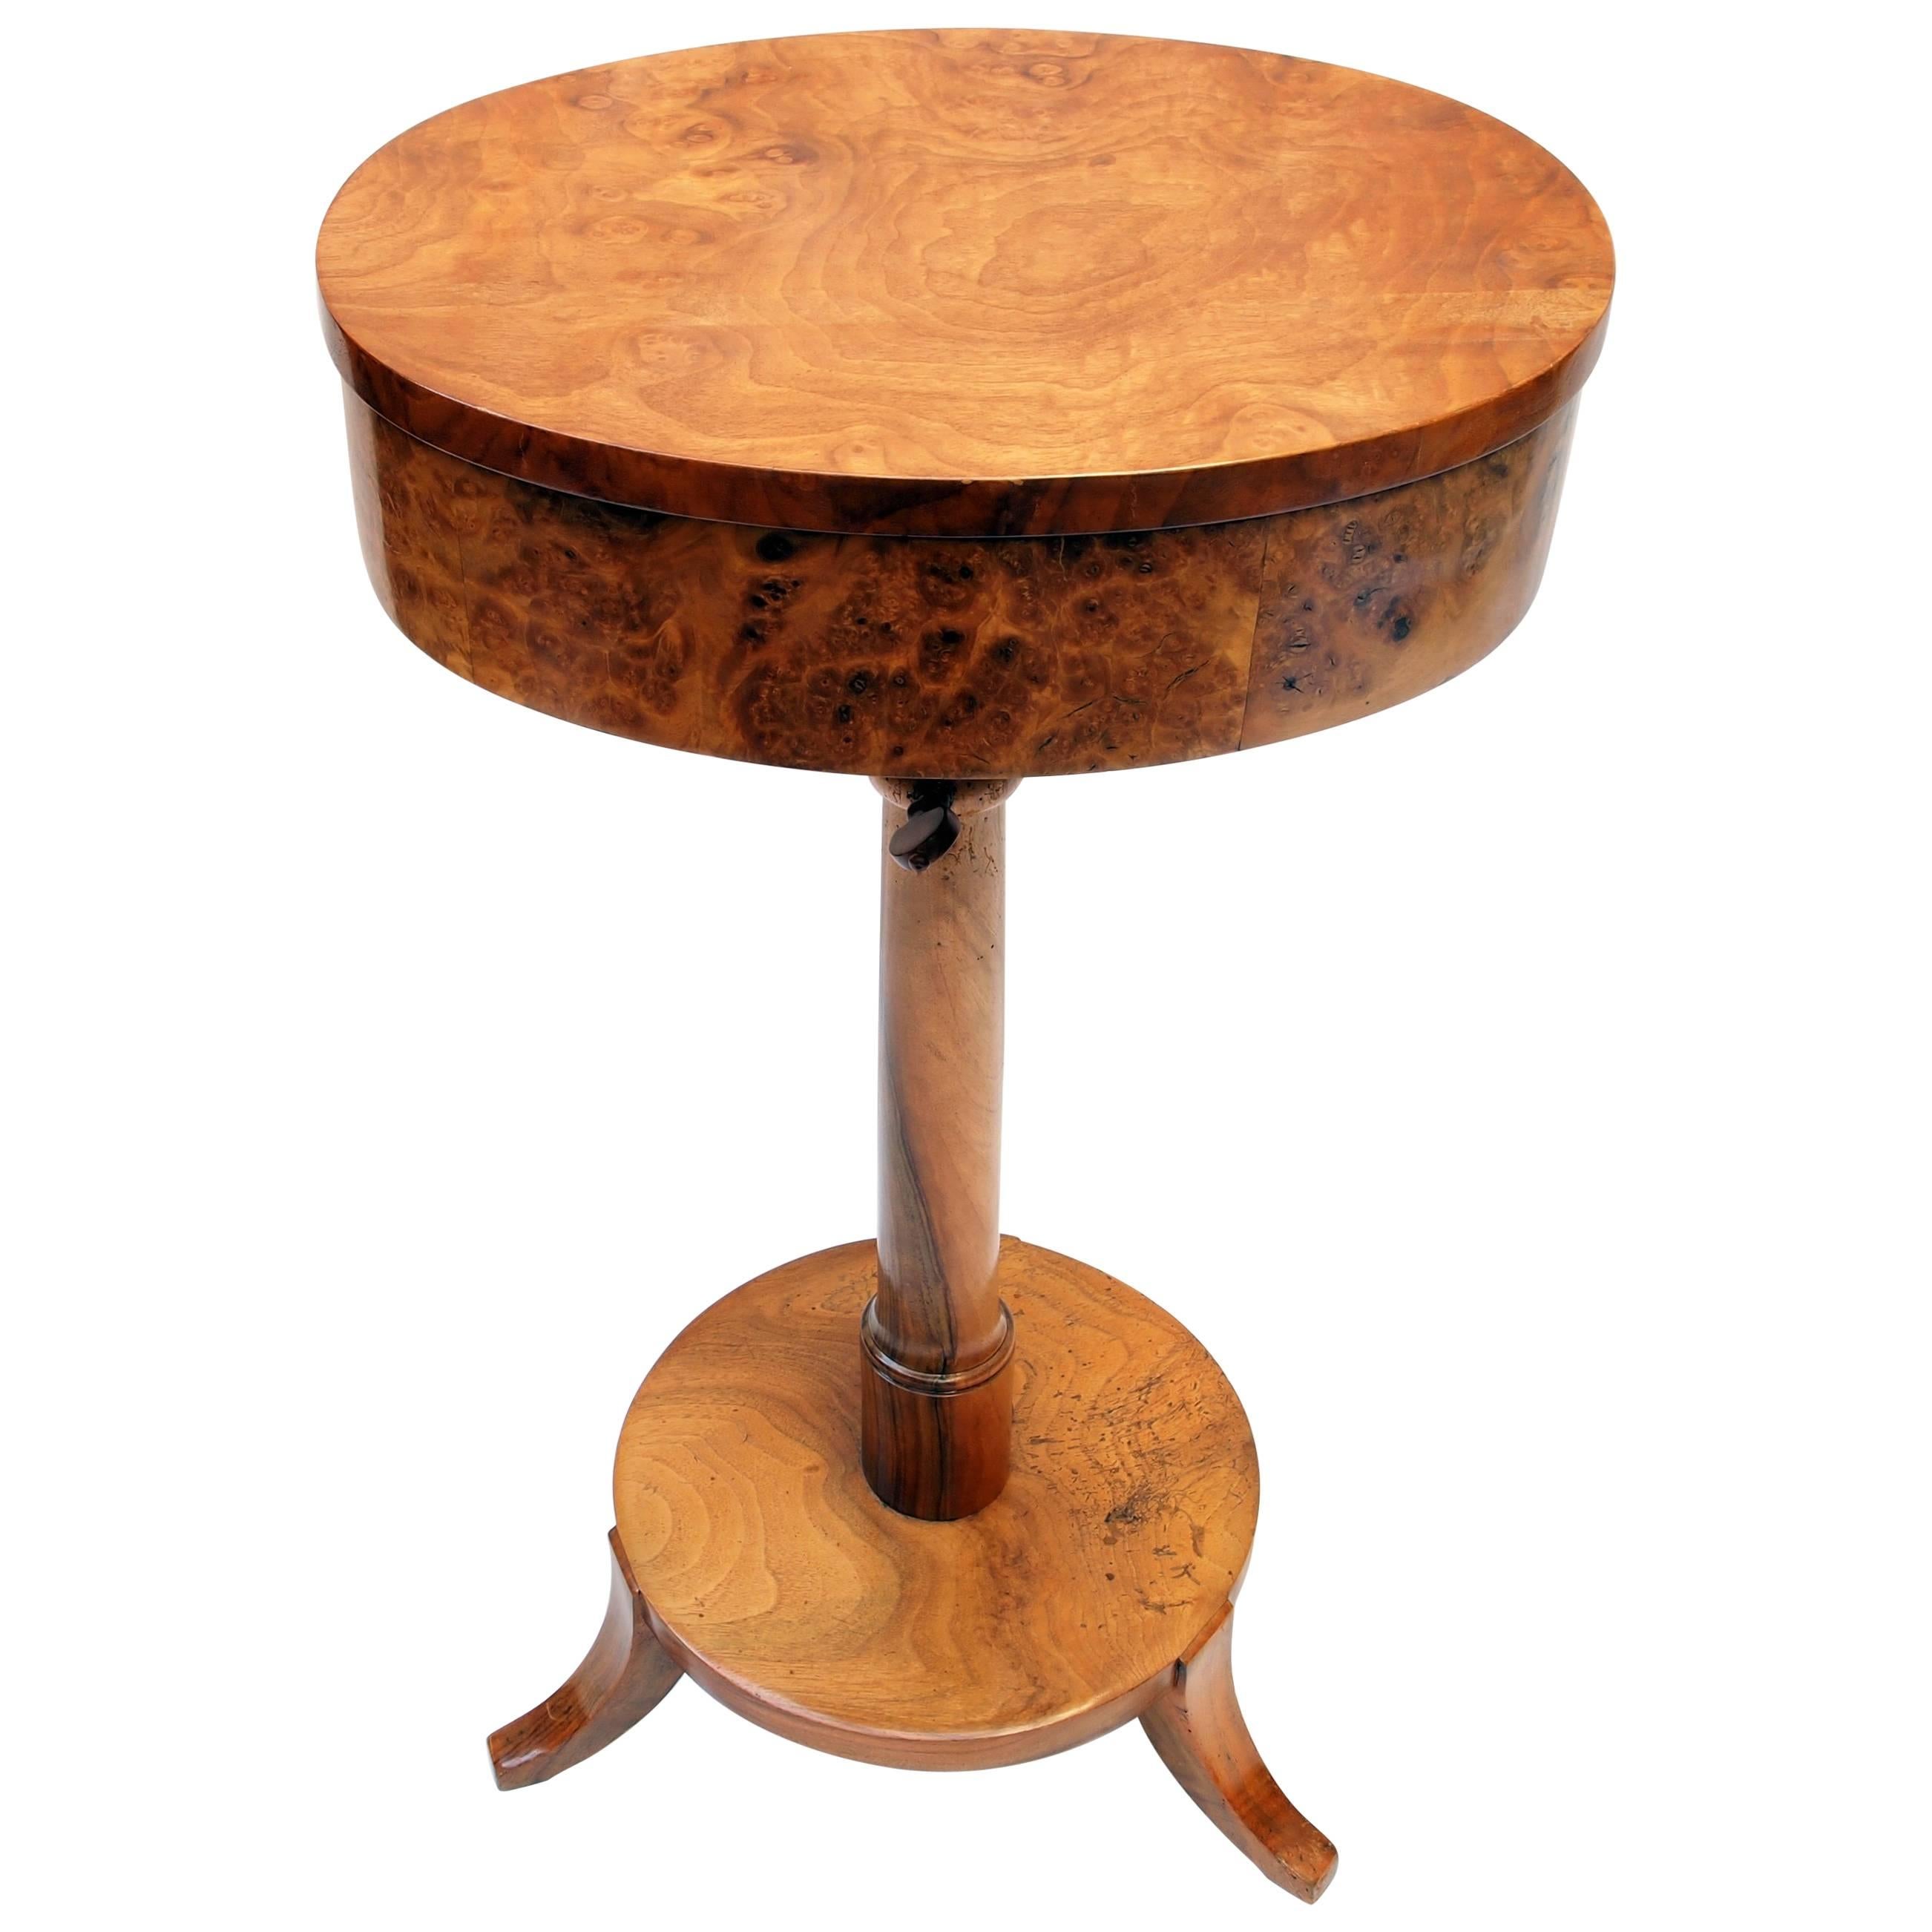 Biedermeier Sewing Table Made of Walnut Wood